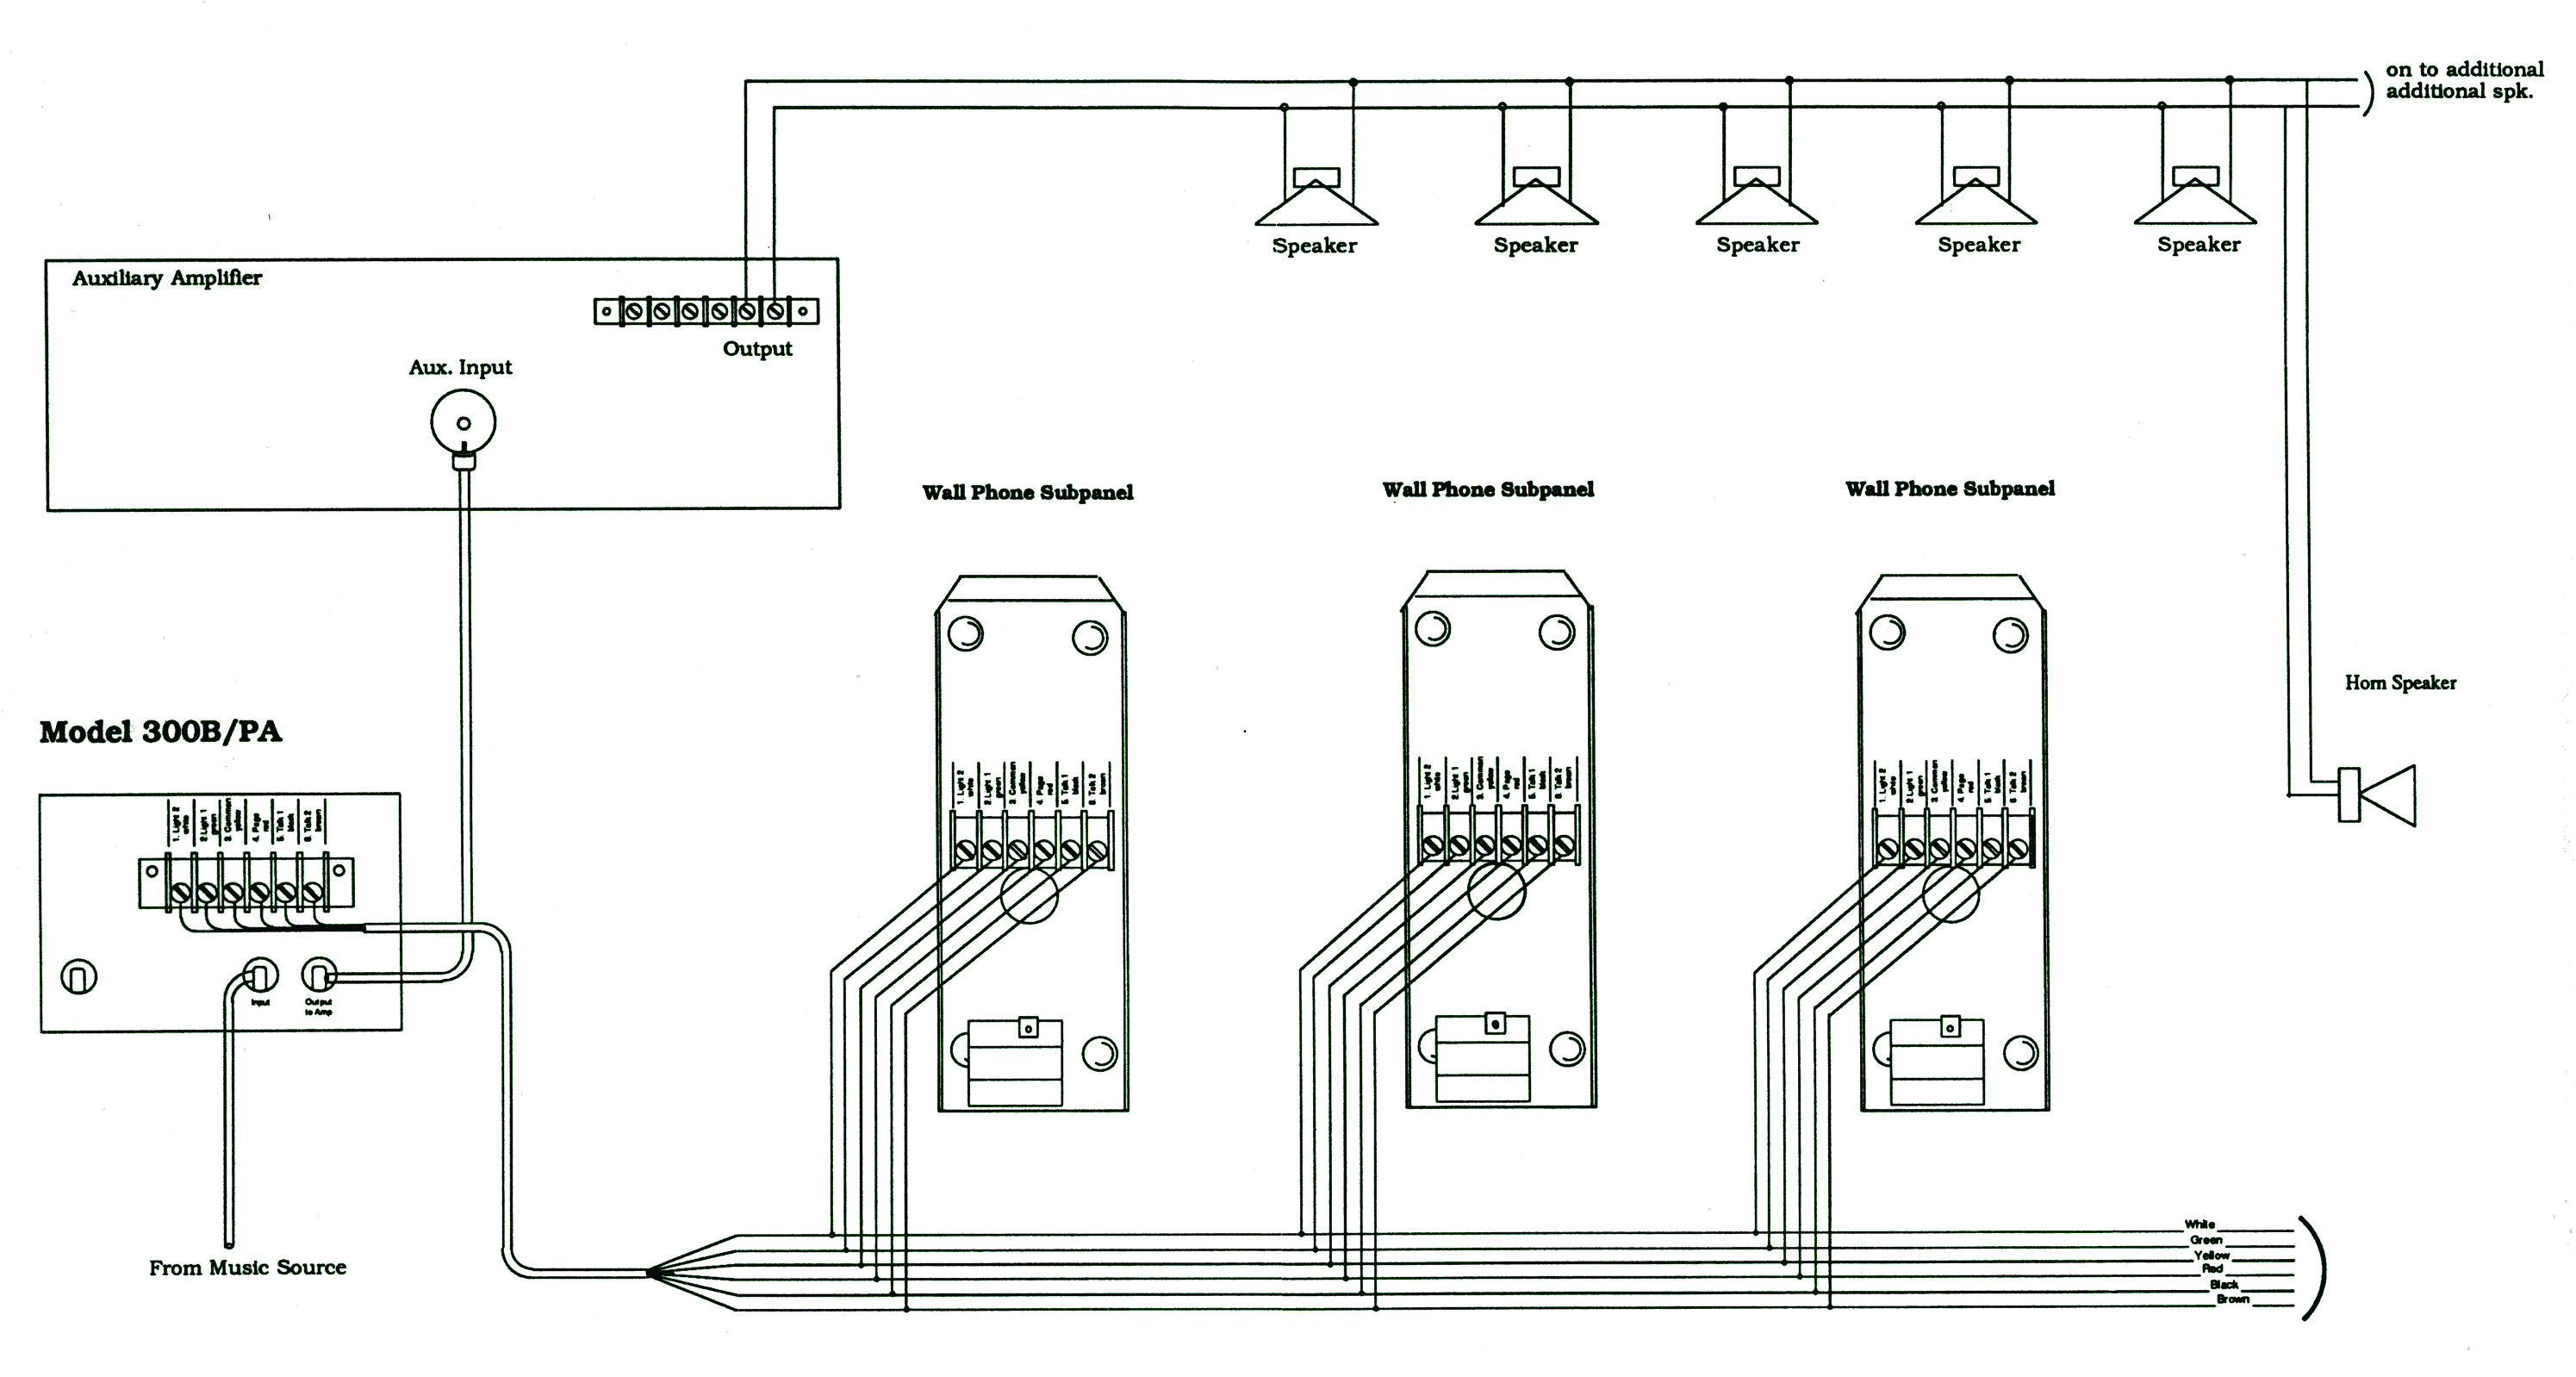 wiring diagram for intercoms wiring diagram world source aiphone intercom wiringdiagram